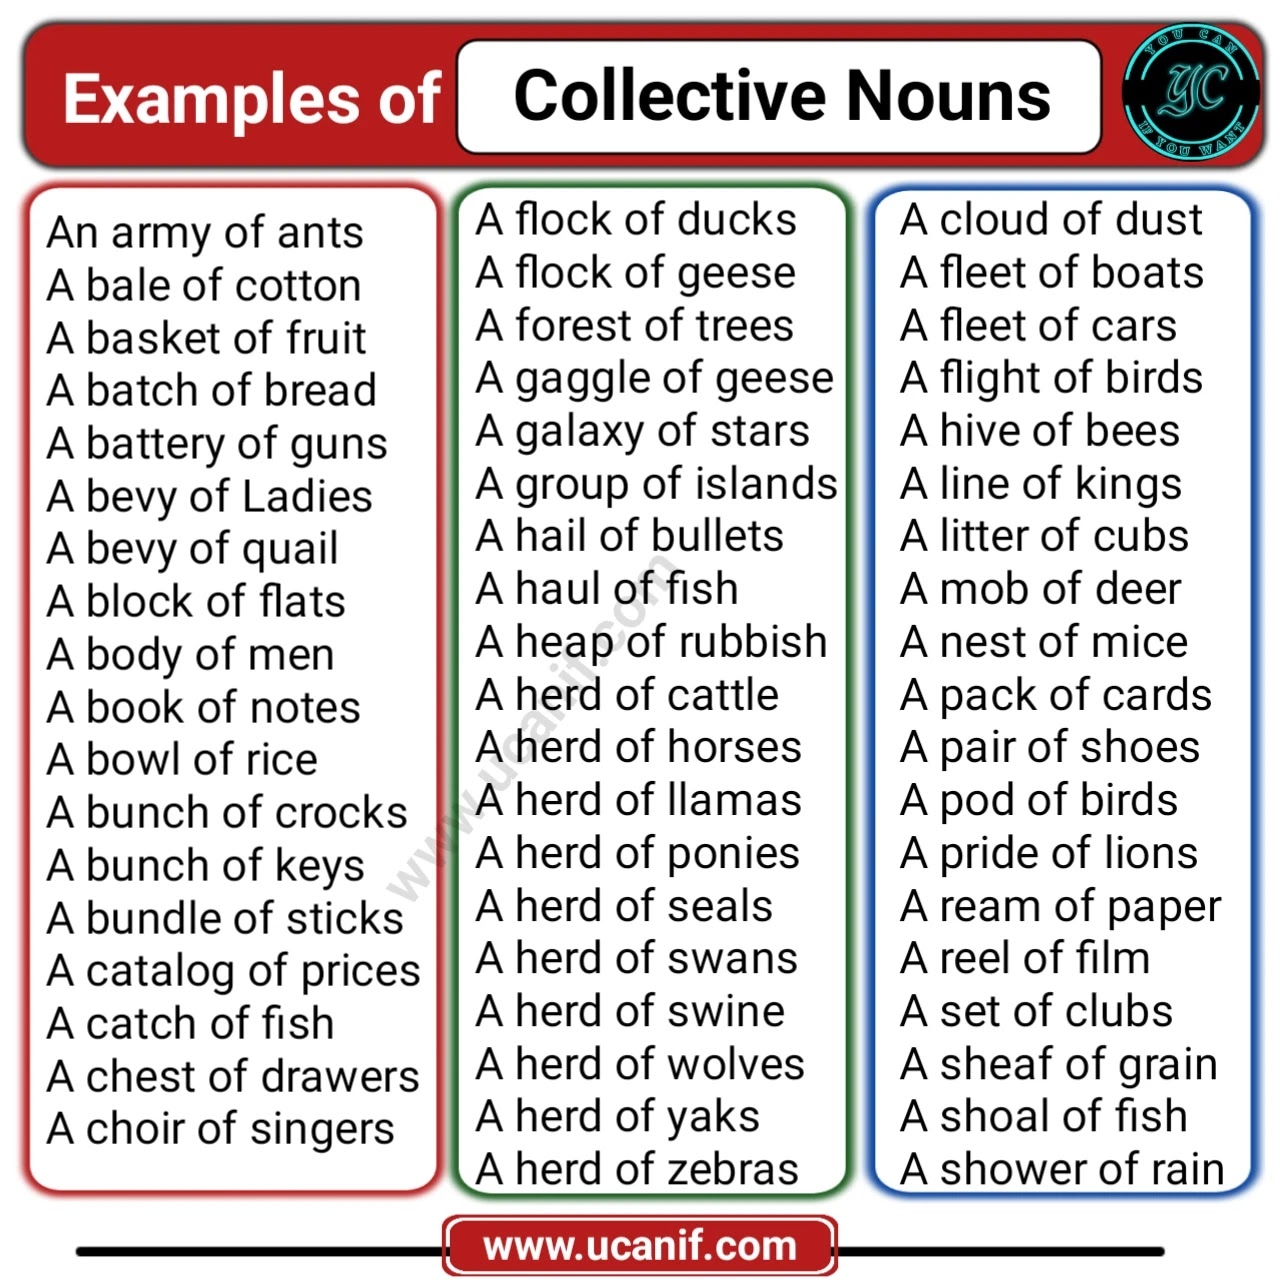 100-collective-nouns-examples-a-to-z